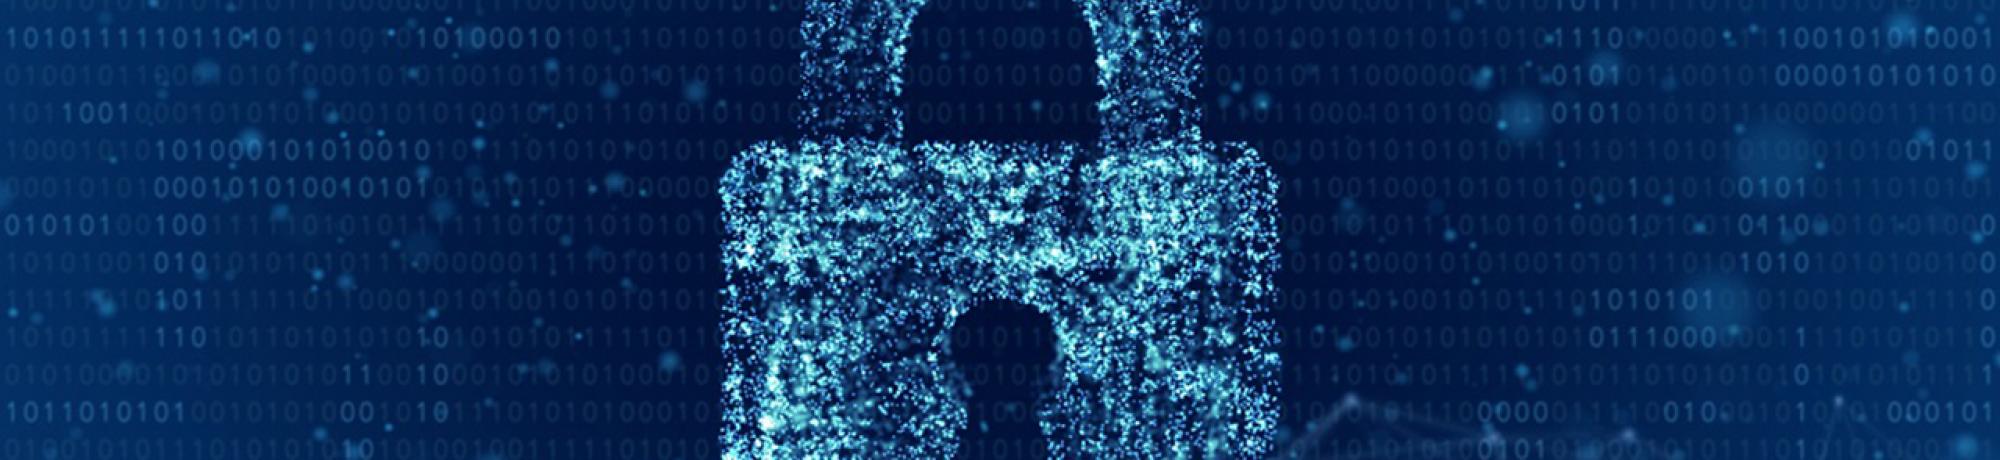 image of padlock made of data bits